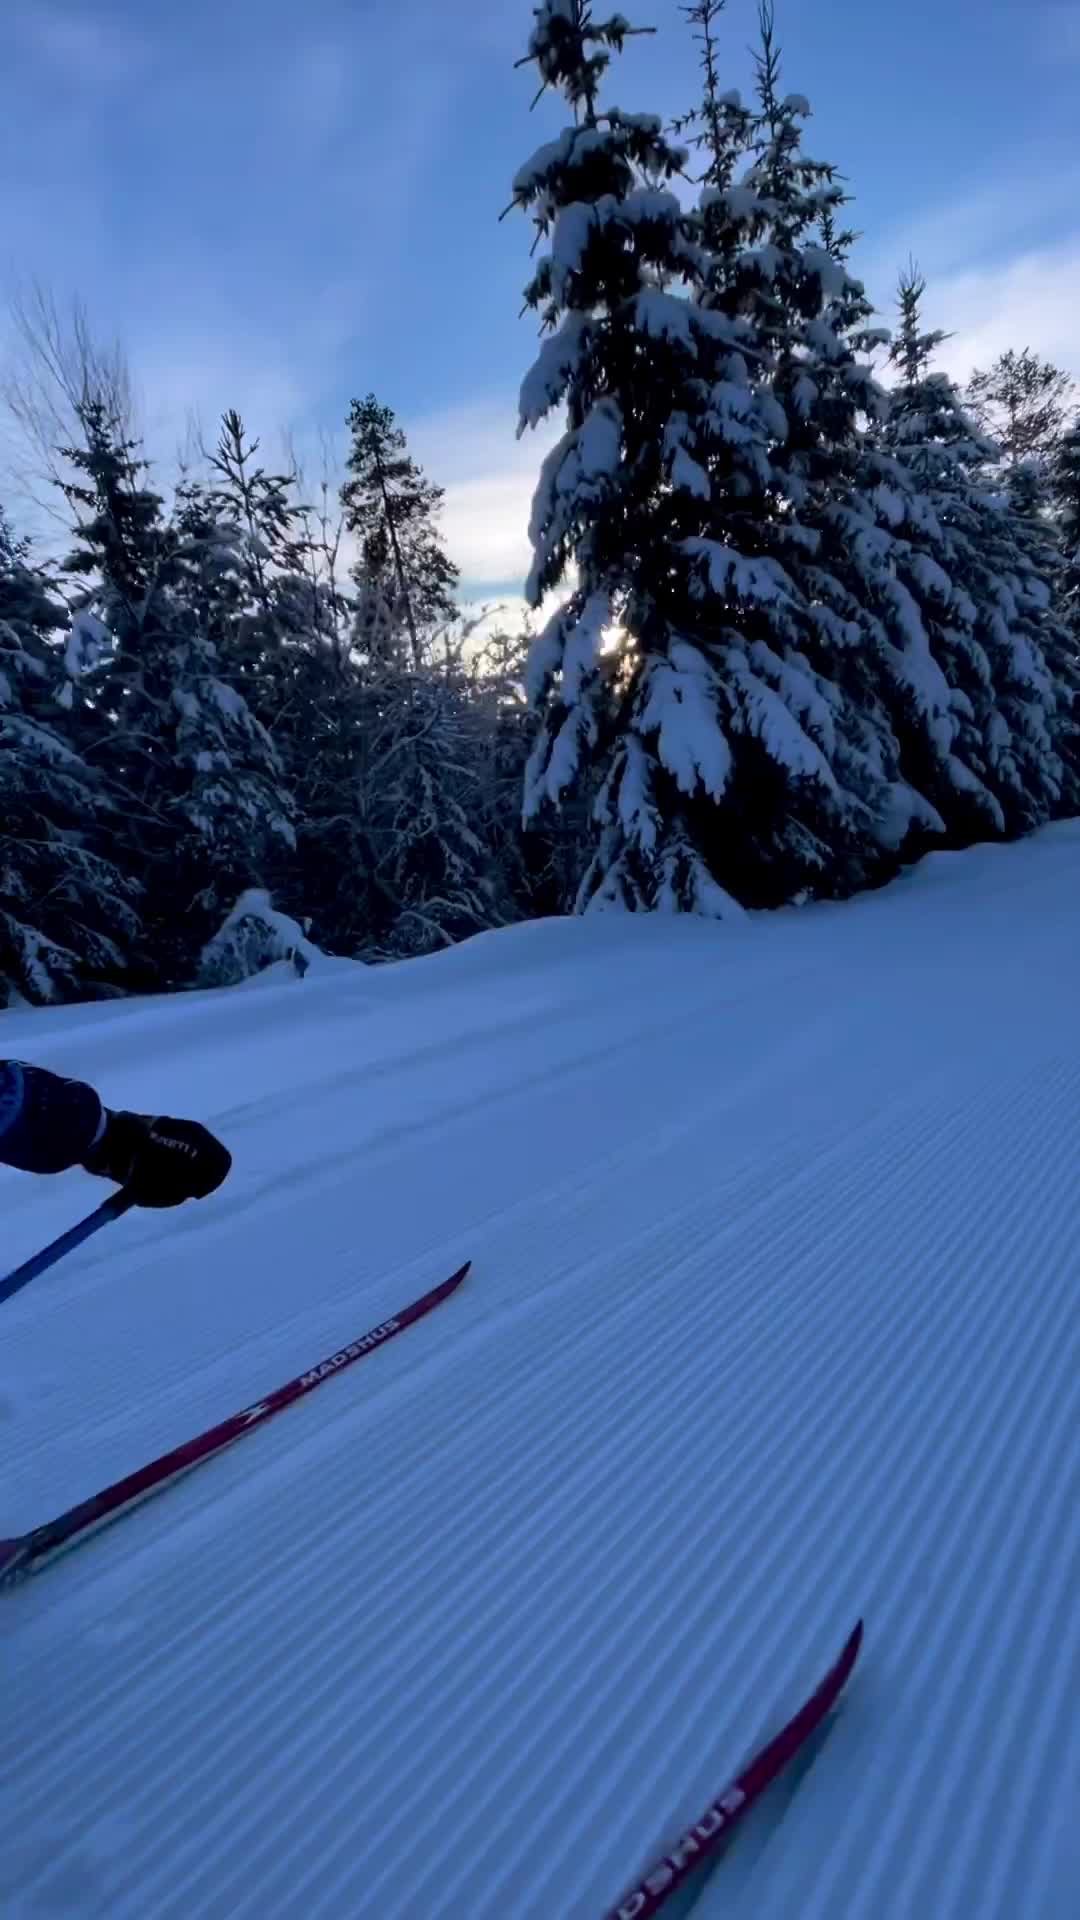 Exciting Ski Weekend in Falun Despite Tough Conditions